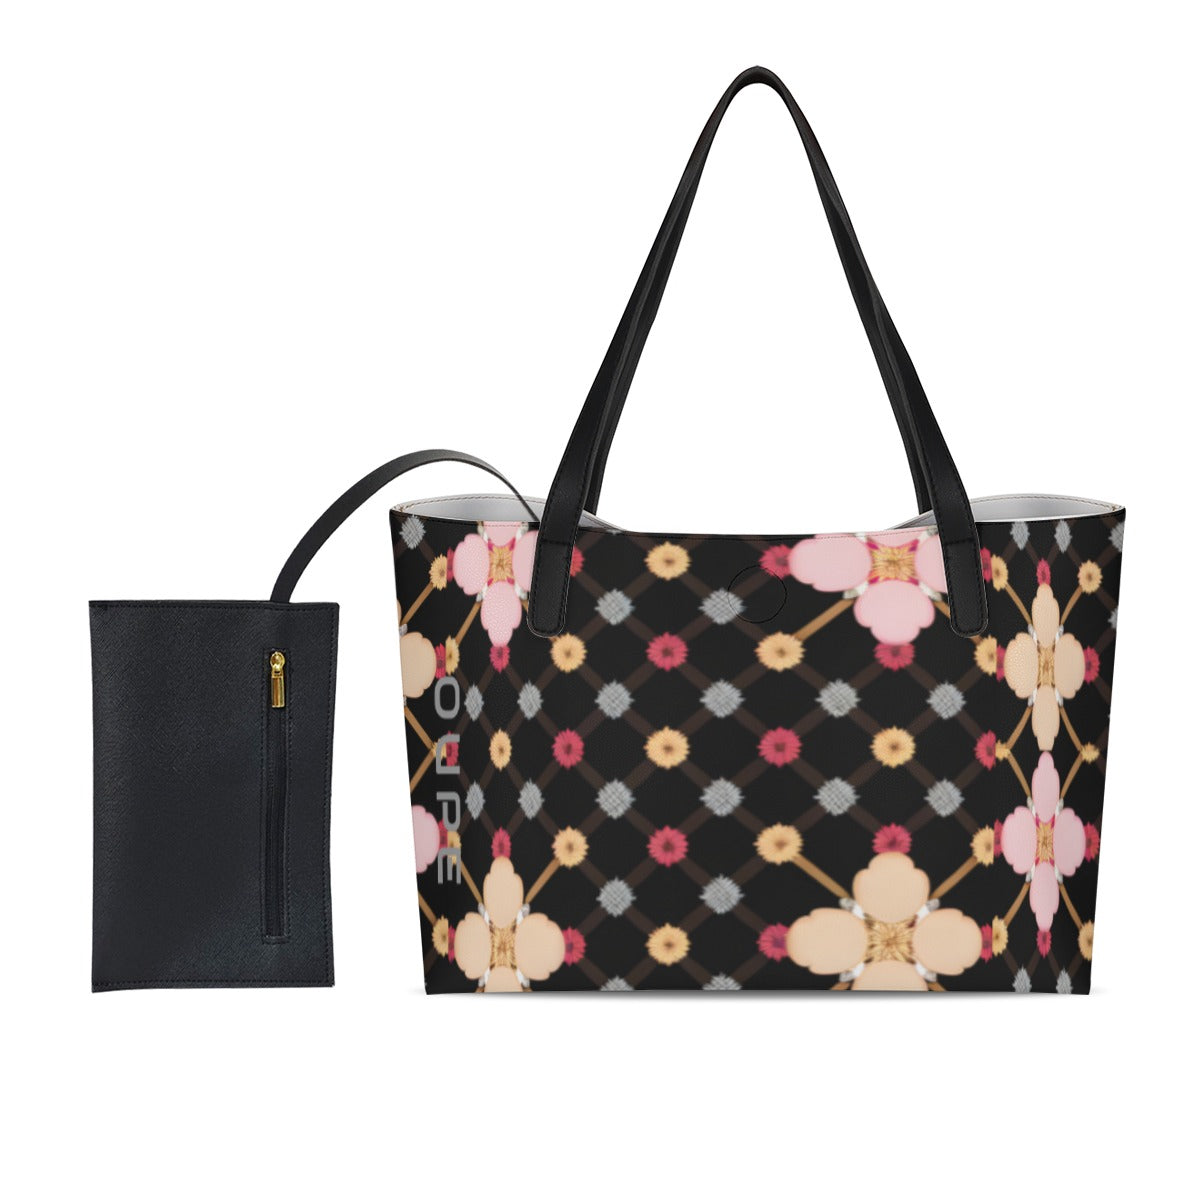 AC KAMI OUPE Shopping Tote Bag With Black Mini Purse